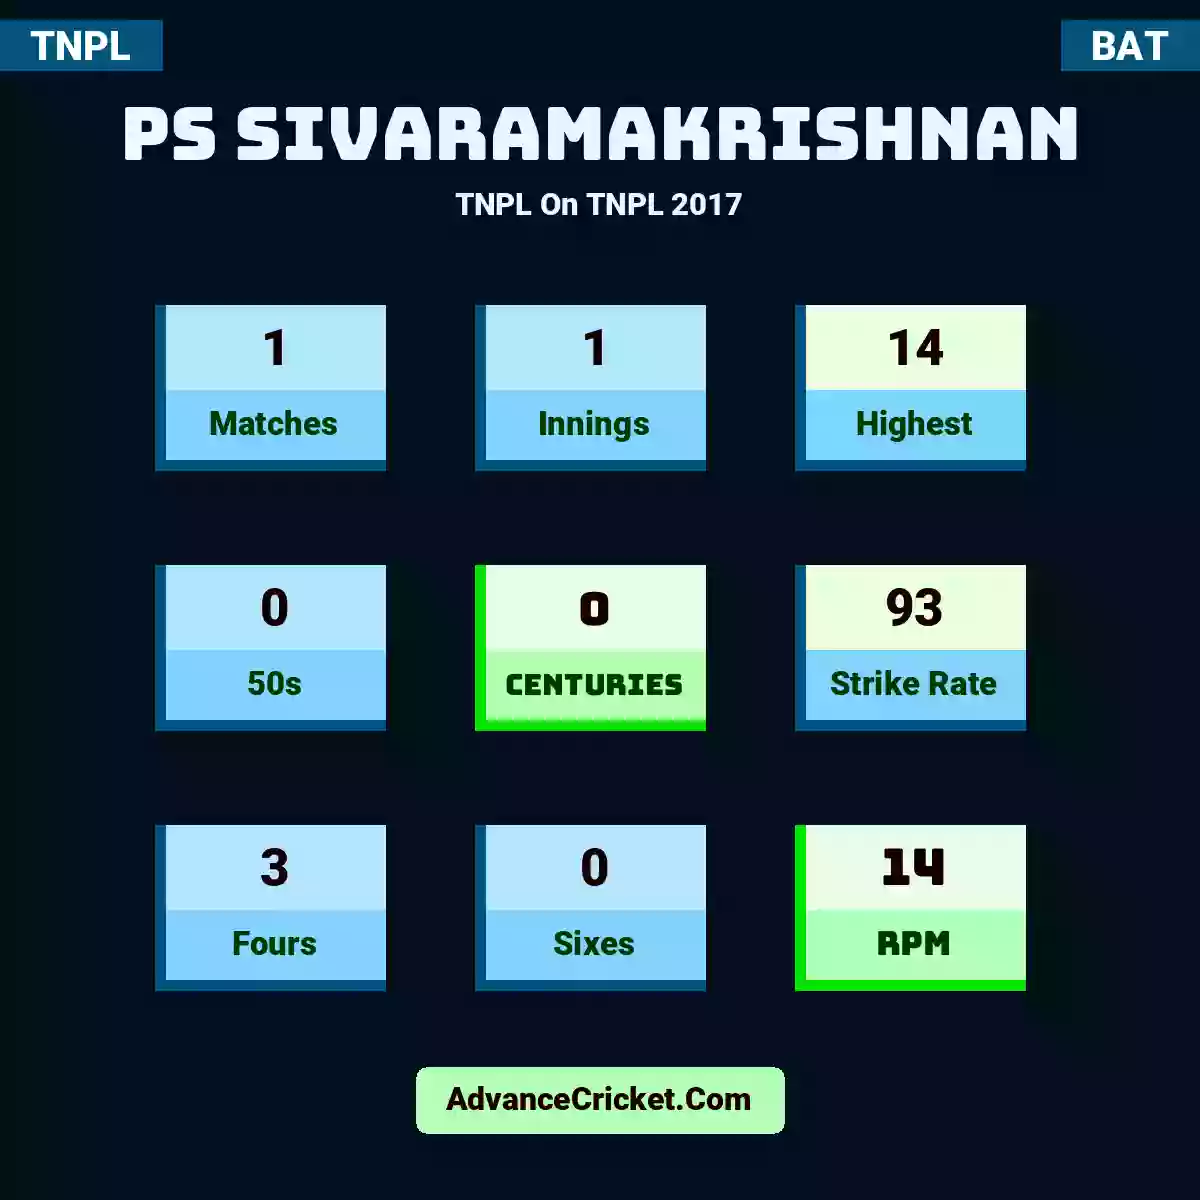 PS Sivaramakrishnan TNPL  On TNPL 2017, PS Sivaramakrishnan played 1 matches, scored 14 runs as highest, 0 half-centuries, and 0 centuries, with a strike rate of 93. P.Sivaramakrishnan hit 3 fours and 0 sixes, with an RPM of 14.